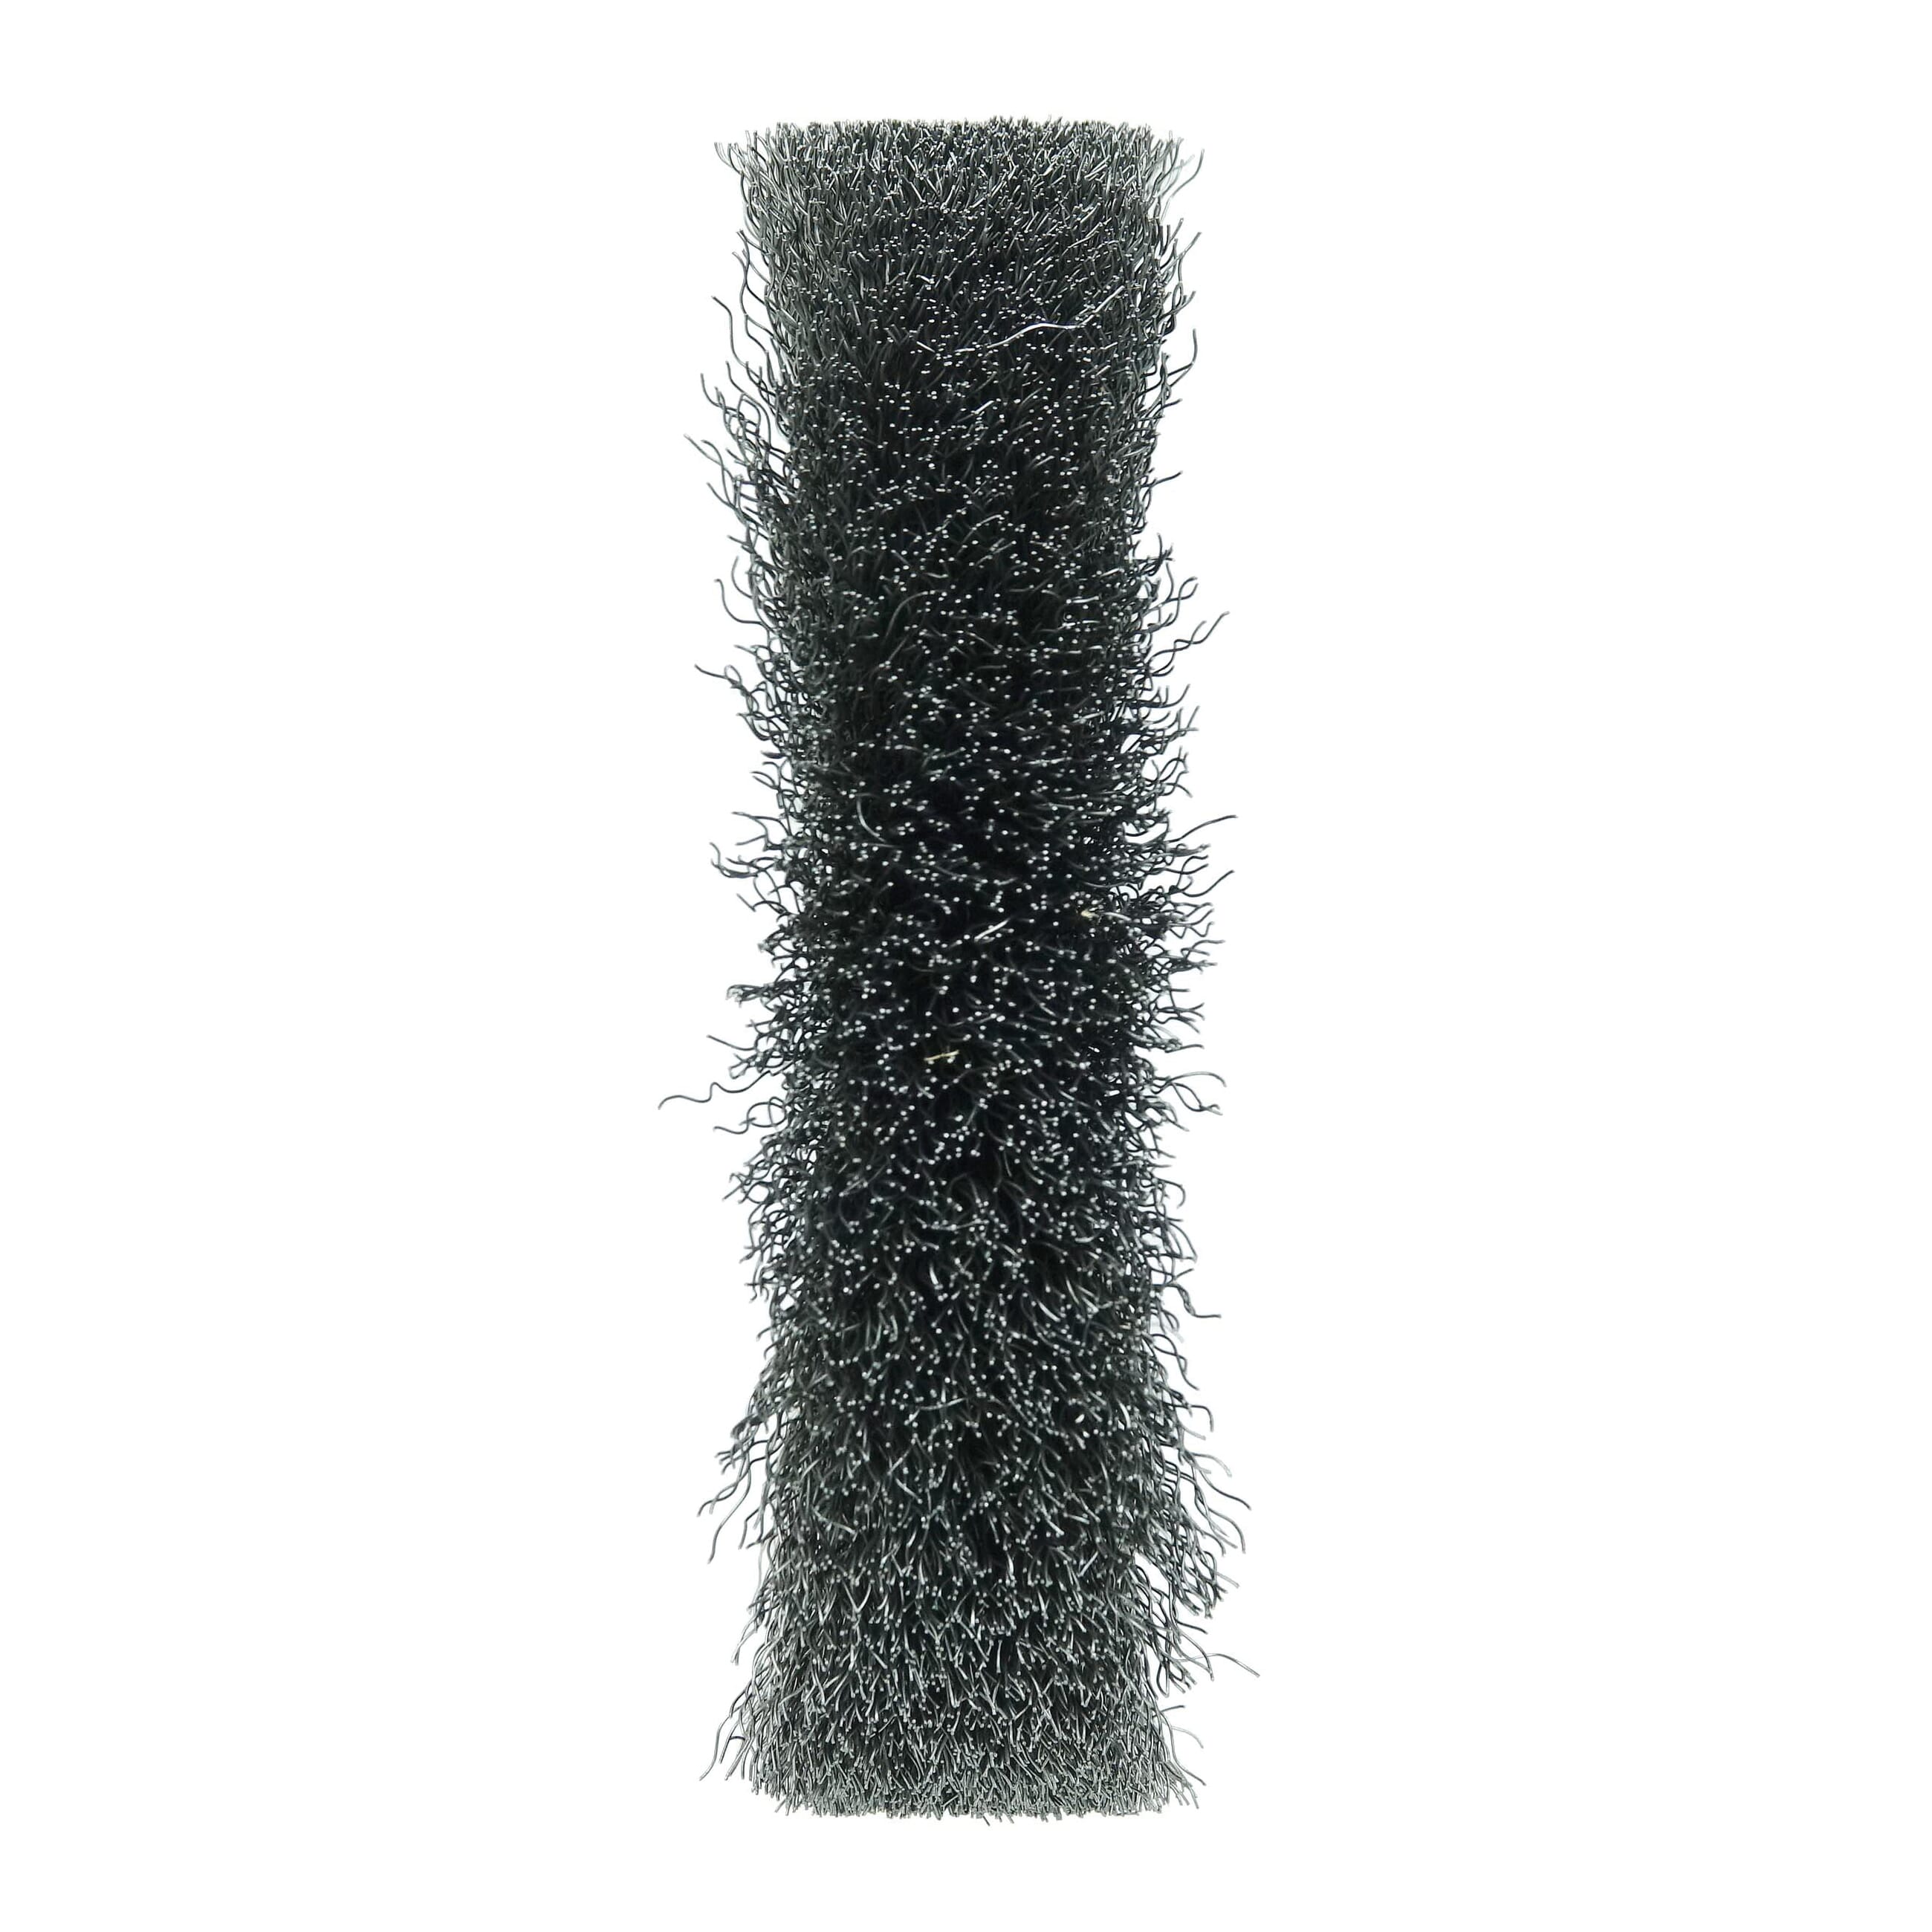 Weiler® 06080 Medium Face Wheel Brush, 6 in Dia Brush, 1 in W Face, 0.014 in Dia Crimped Filament/Wire, 2 in Arbor Hole